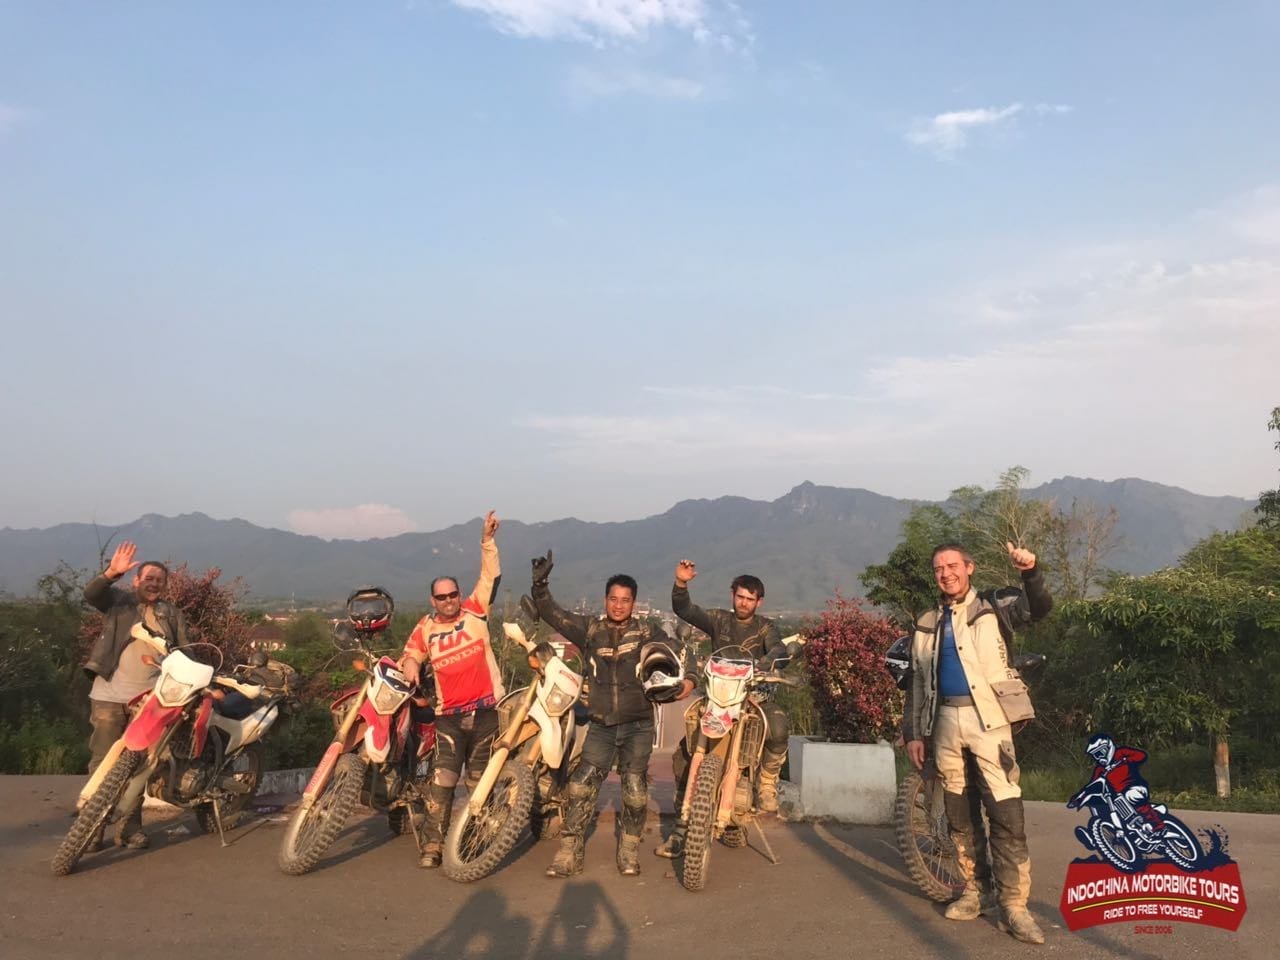 Laos Offroad Motorcycle Tour 11 - Luang Prabang Motorbike Tour to Elephant Camp and Kuang Si Waterfall